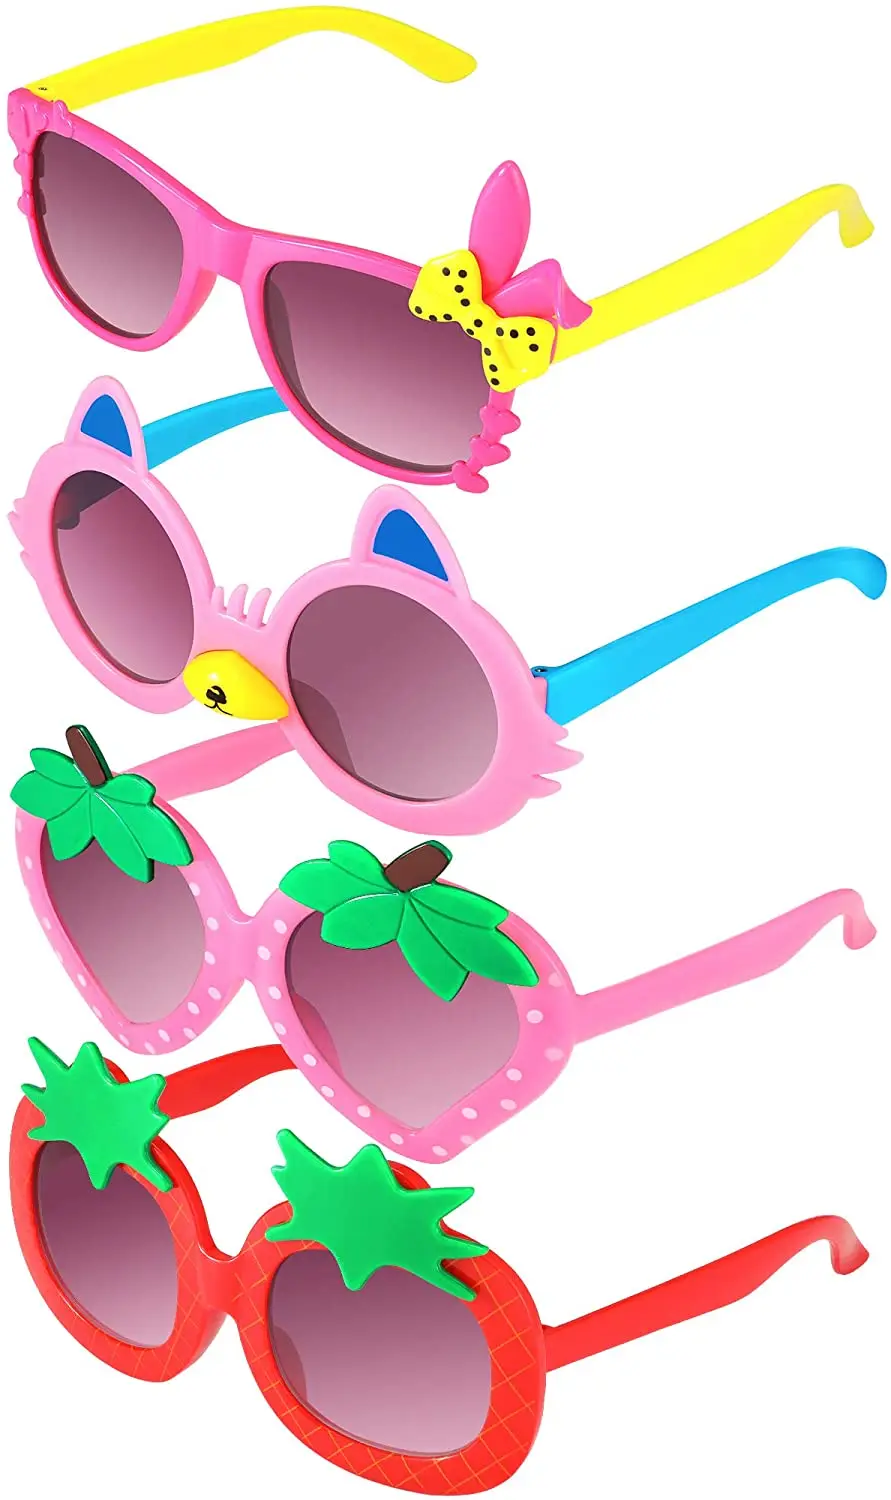 4 Pairs Toddler Sunglasses Girl Sunglasses for Toddler Girls Strawberry Pineapple Rabbit Shaped Sunglasses Funny Sunglasses 